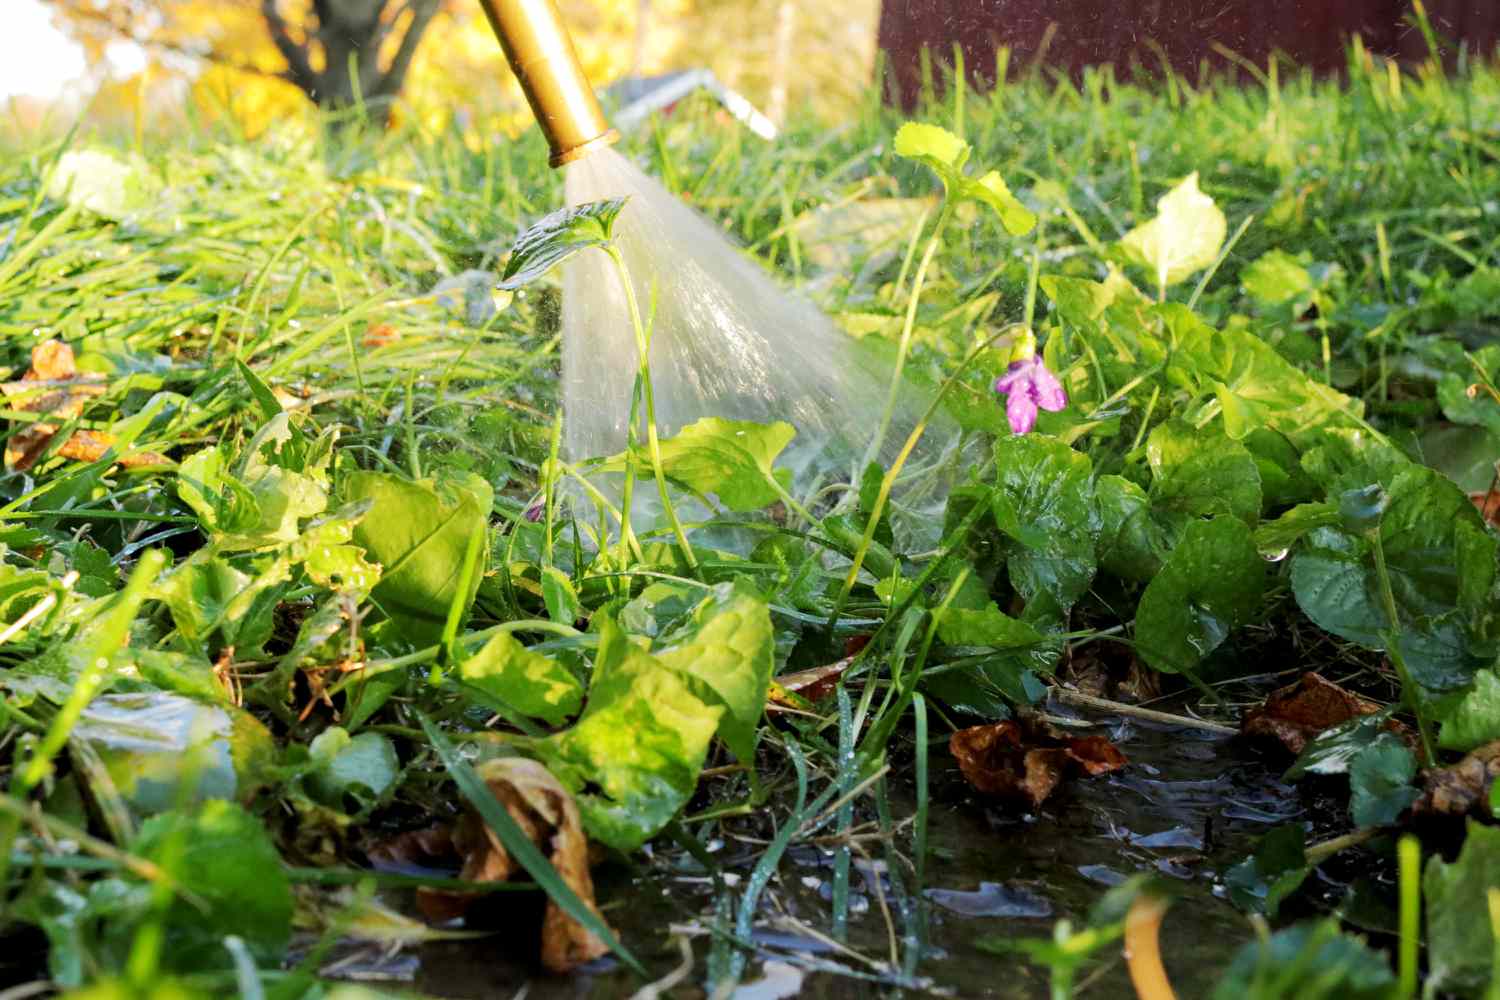 Garden hose spraying water to moisten area with wild violets in lawn